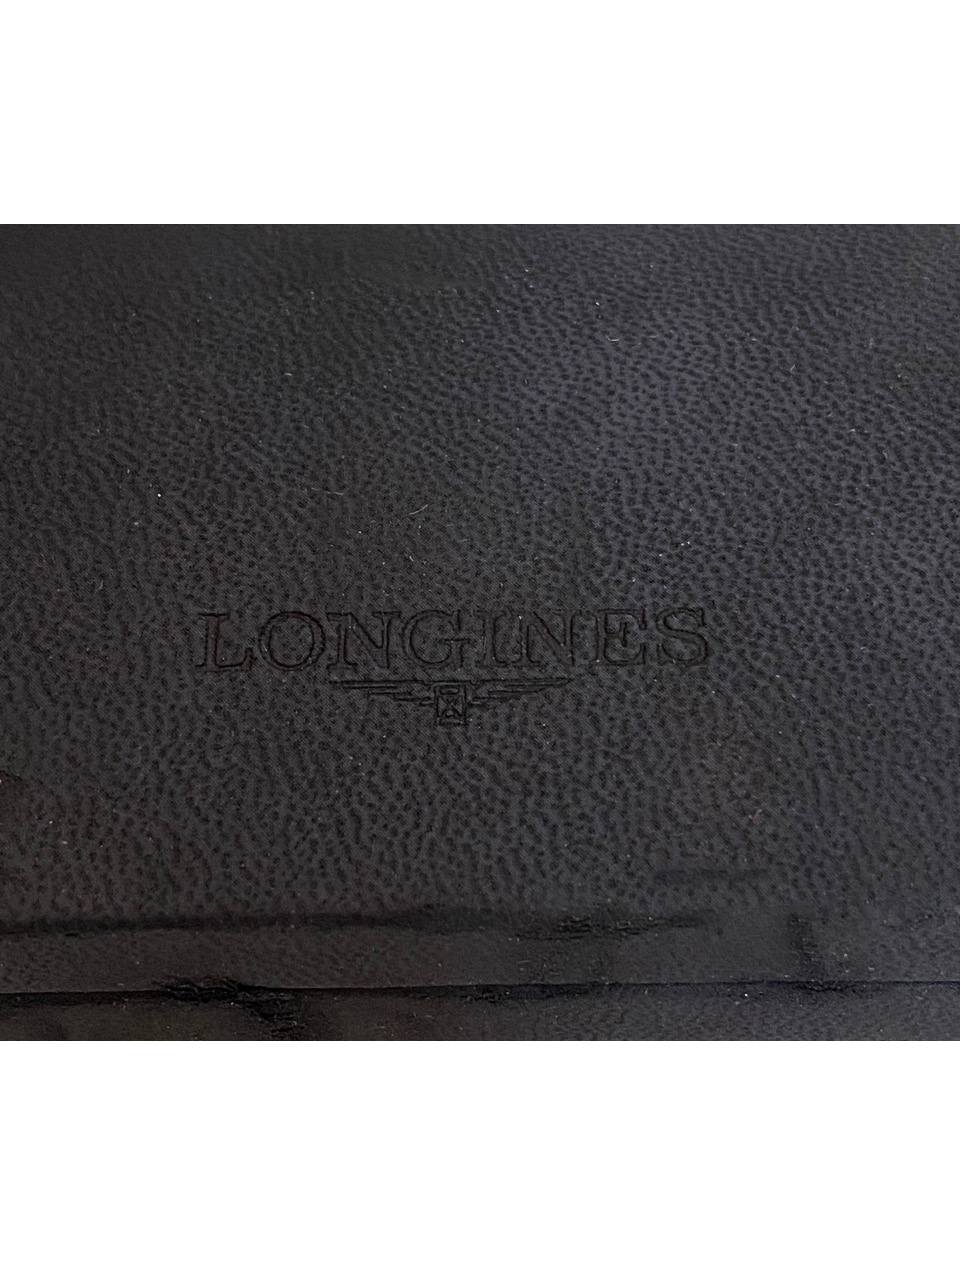 Longines Gents model leather 2000s - Gisbert A. Joseph Watches